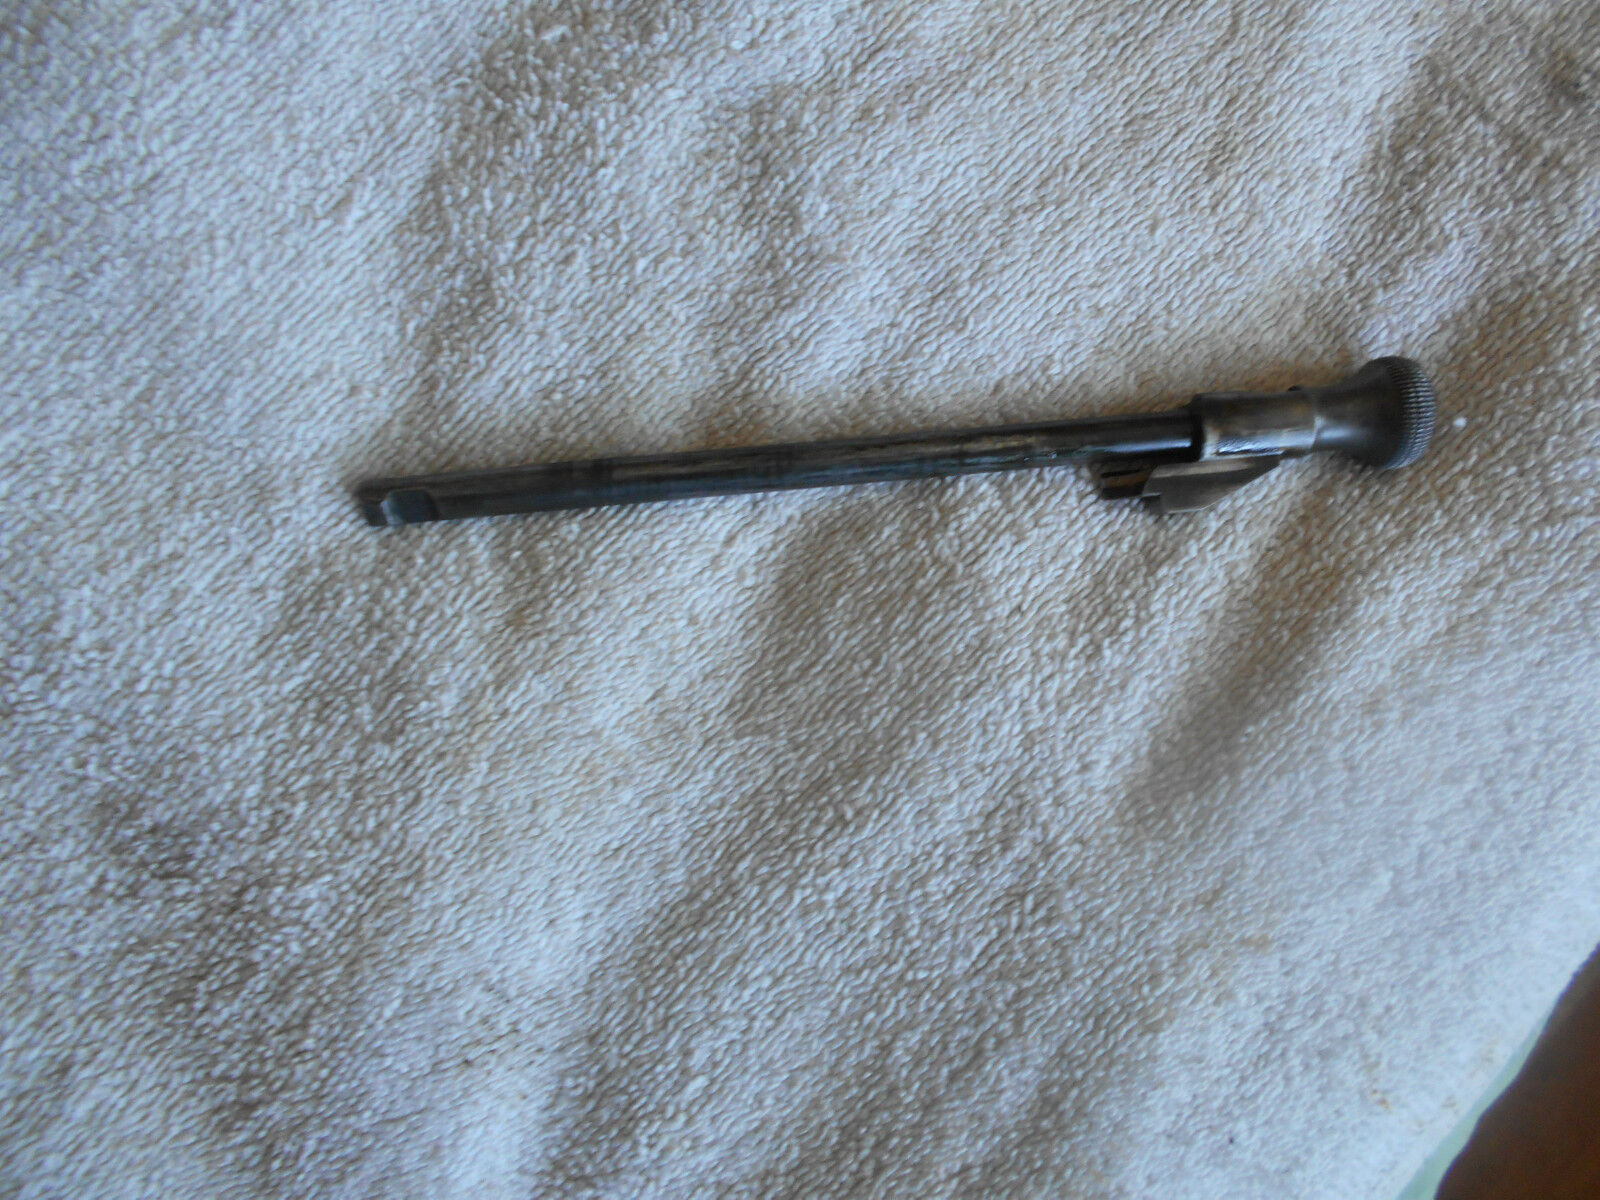 Krag jorgensen model 1898 1896 rifle 1899 carbine 30-40 cal bolt cocking piece